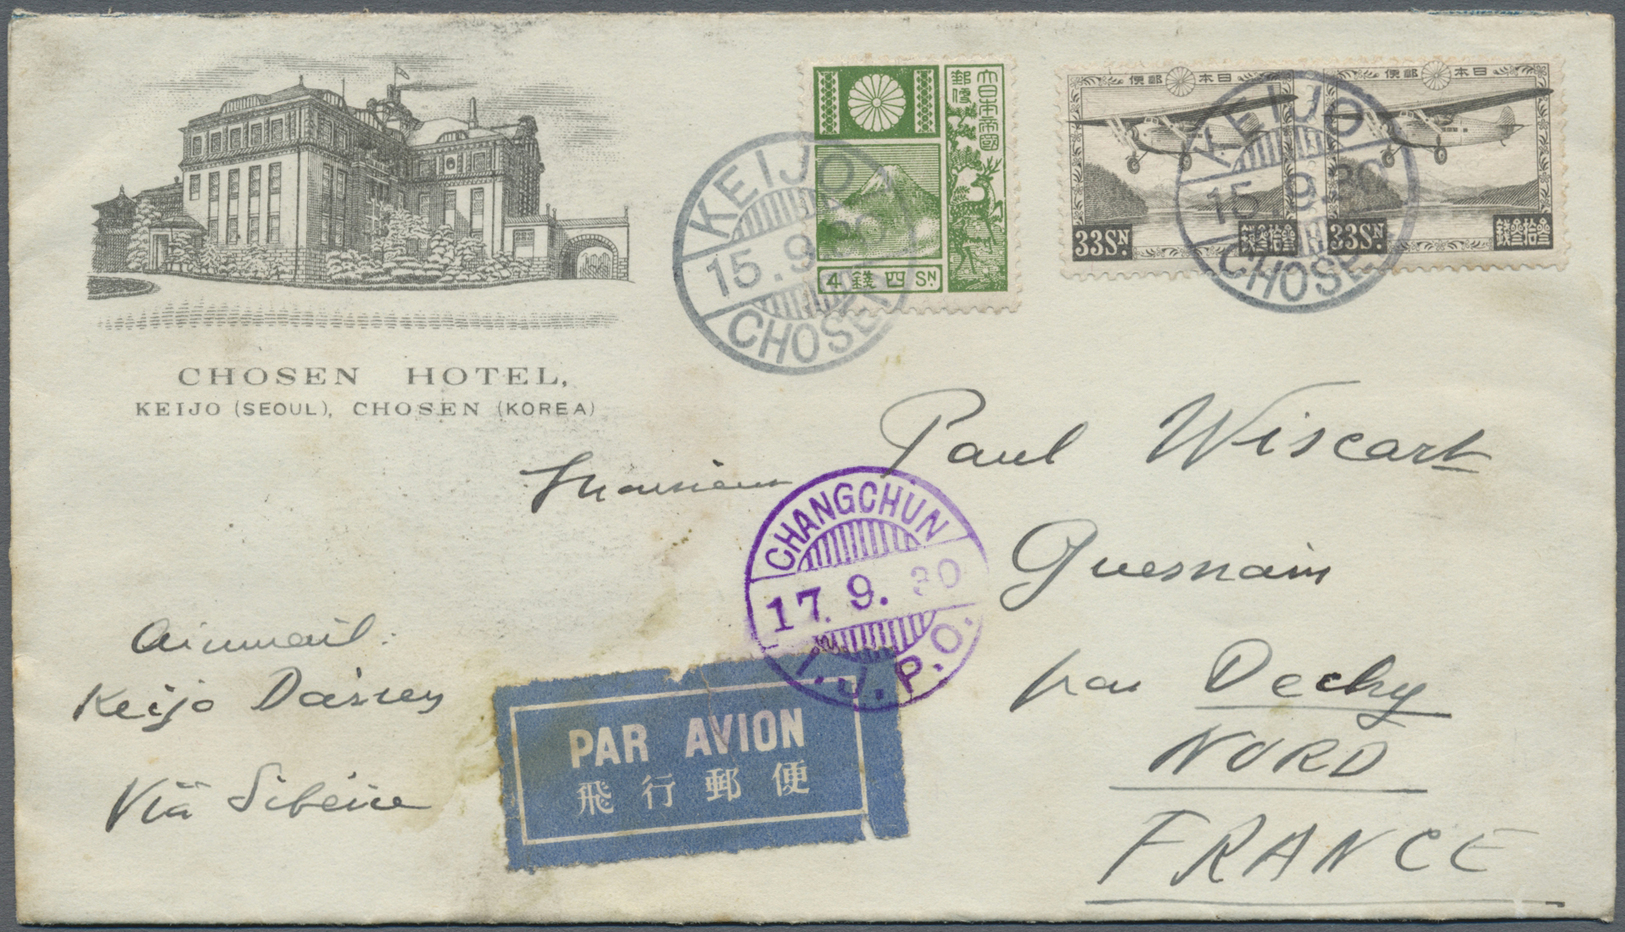 Br Japanische Post In Korea: 1930. Air Mail Envelope On Illustrated 'Chosen Hotel, Keijo' Envelope Addressed To France B - Franchise Militaire